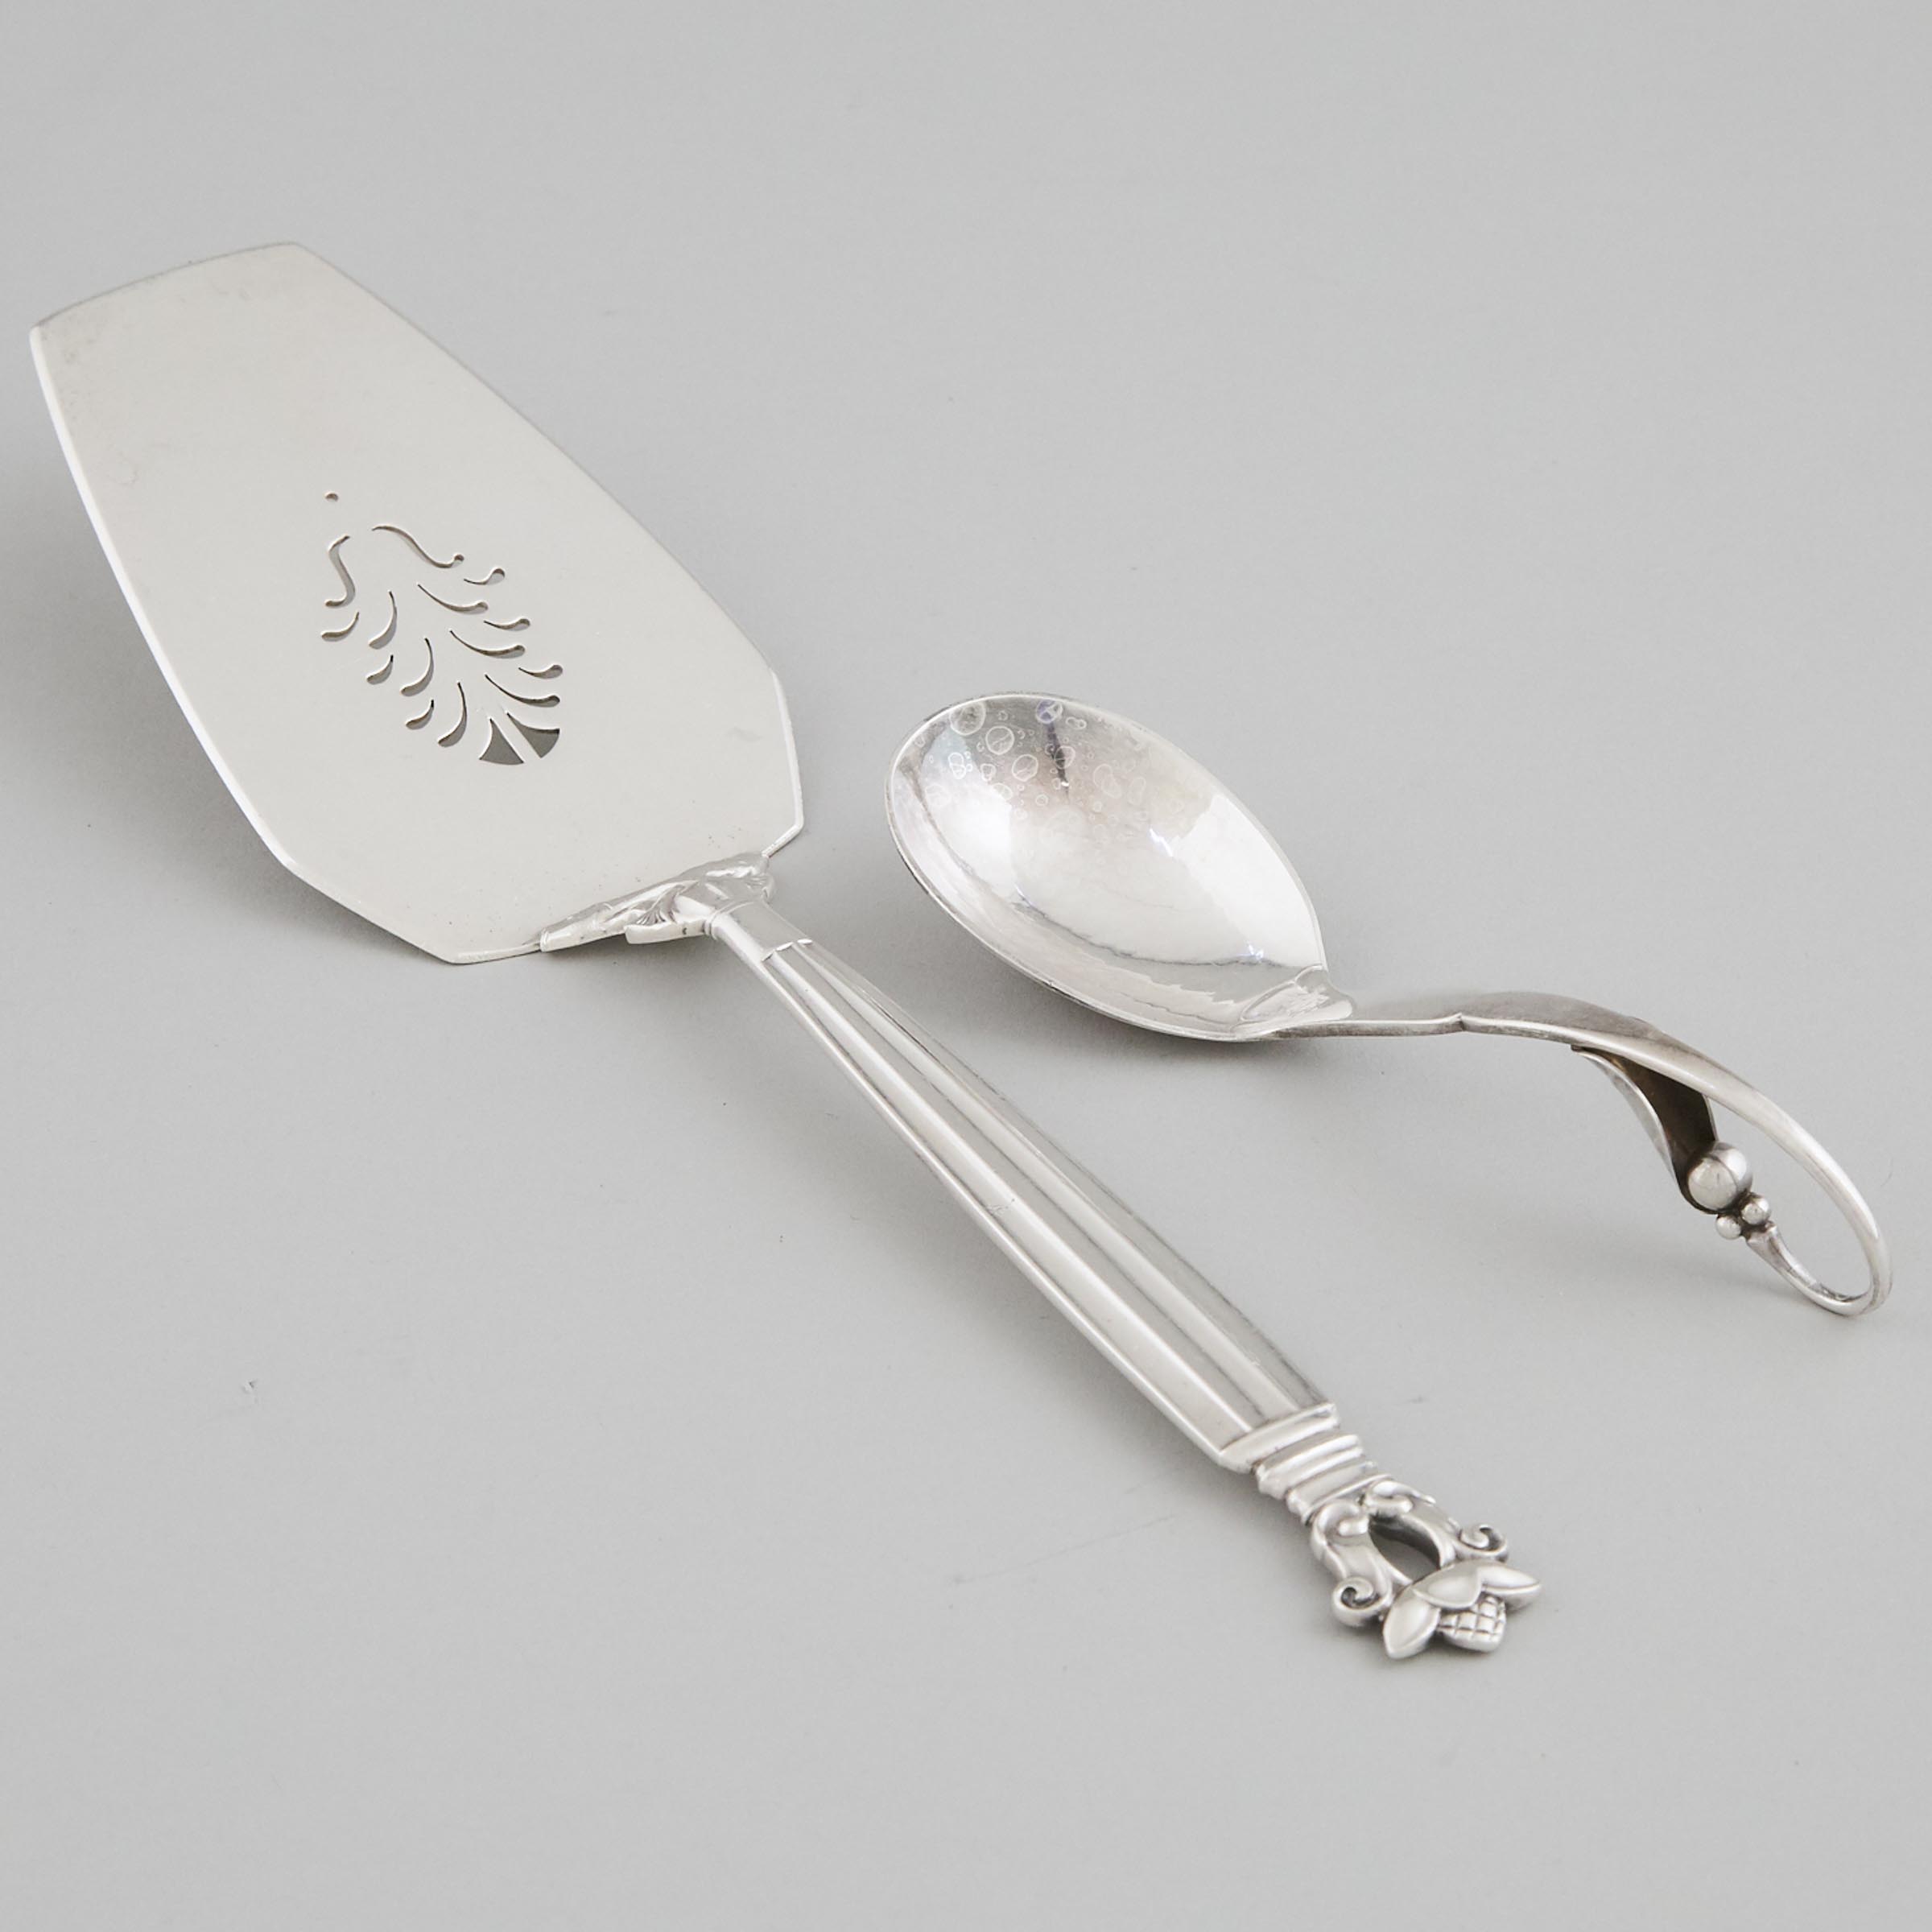 Danish Silver ‘Acorn’ Pattern Fish Server, Johan Rohde, and a Spoon, #21, Georg Jensen, Copenhagen, 20th century